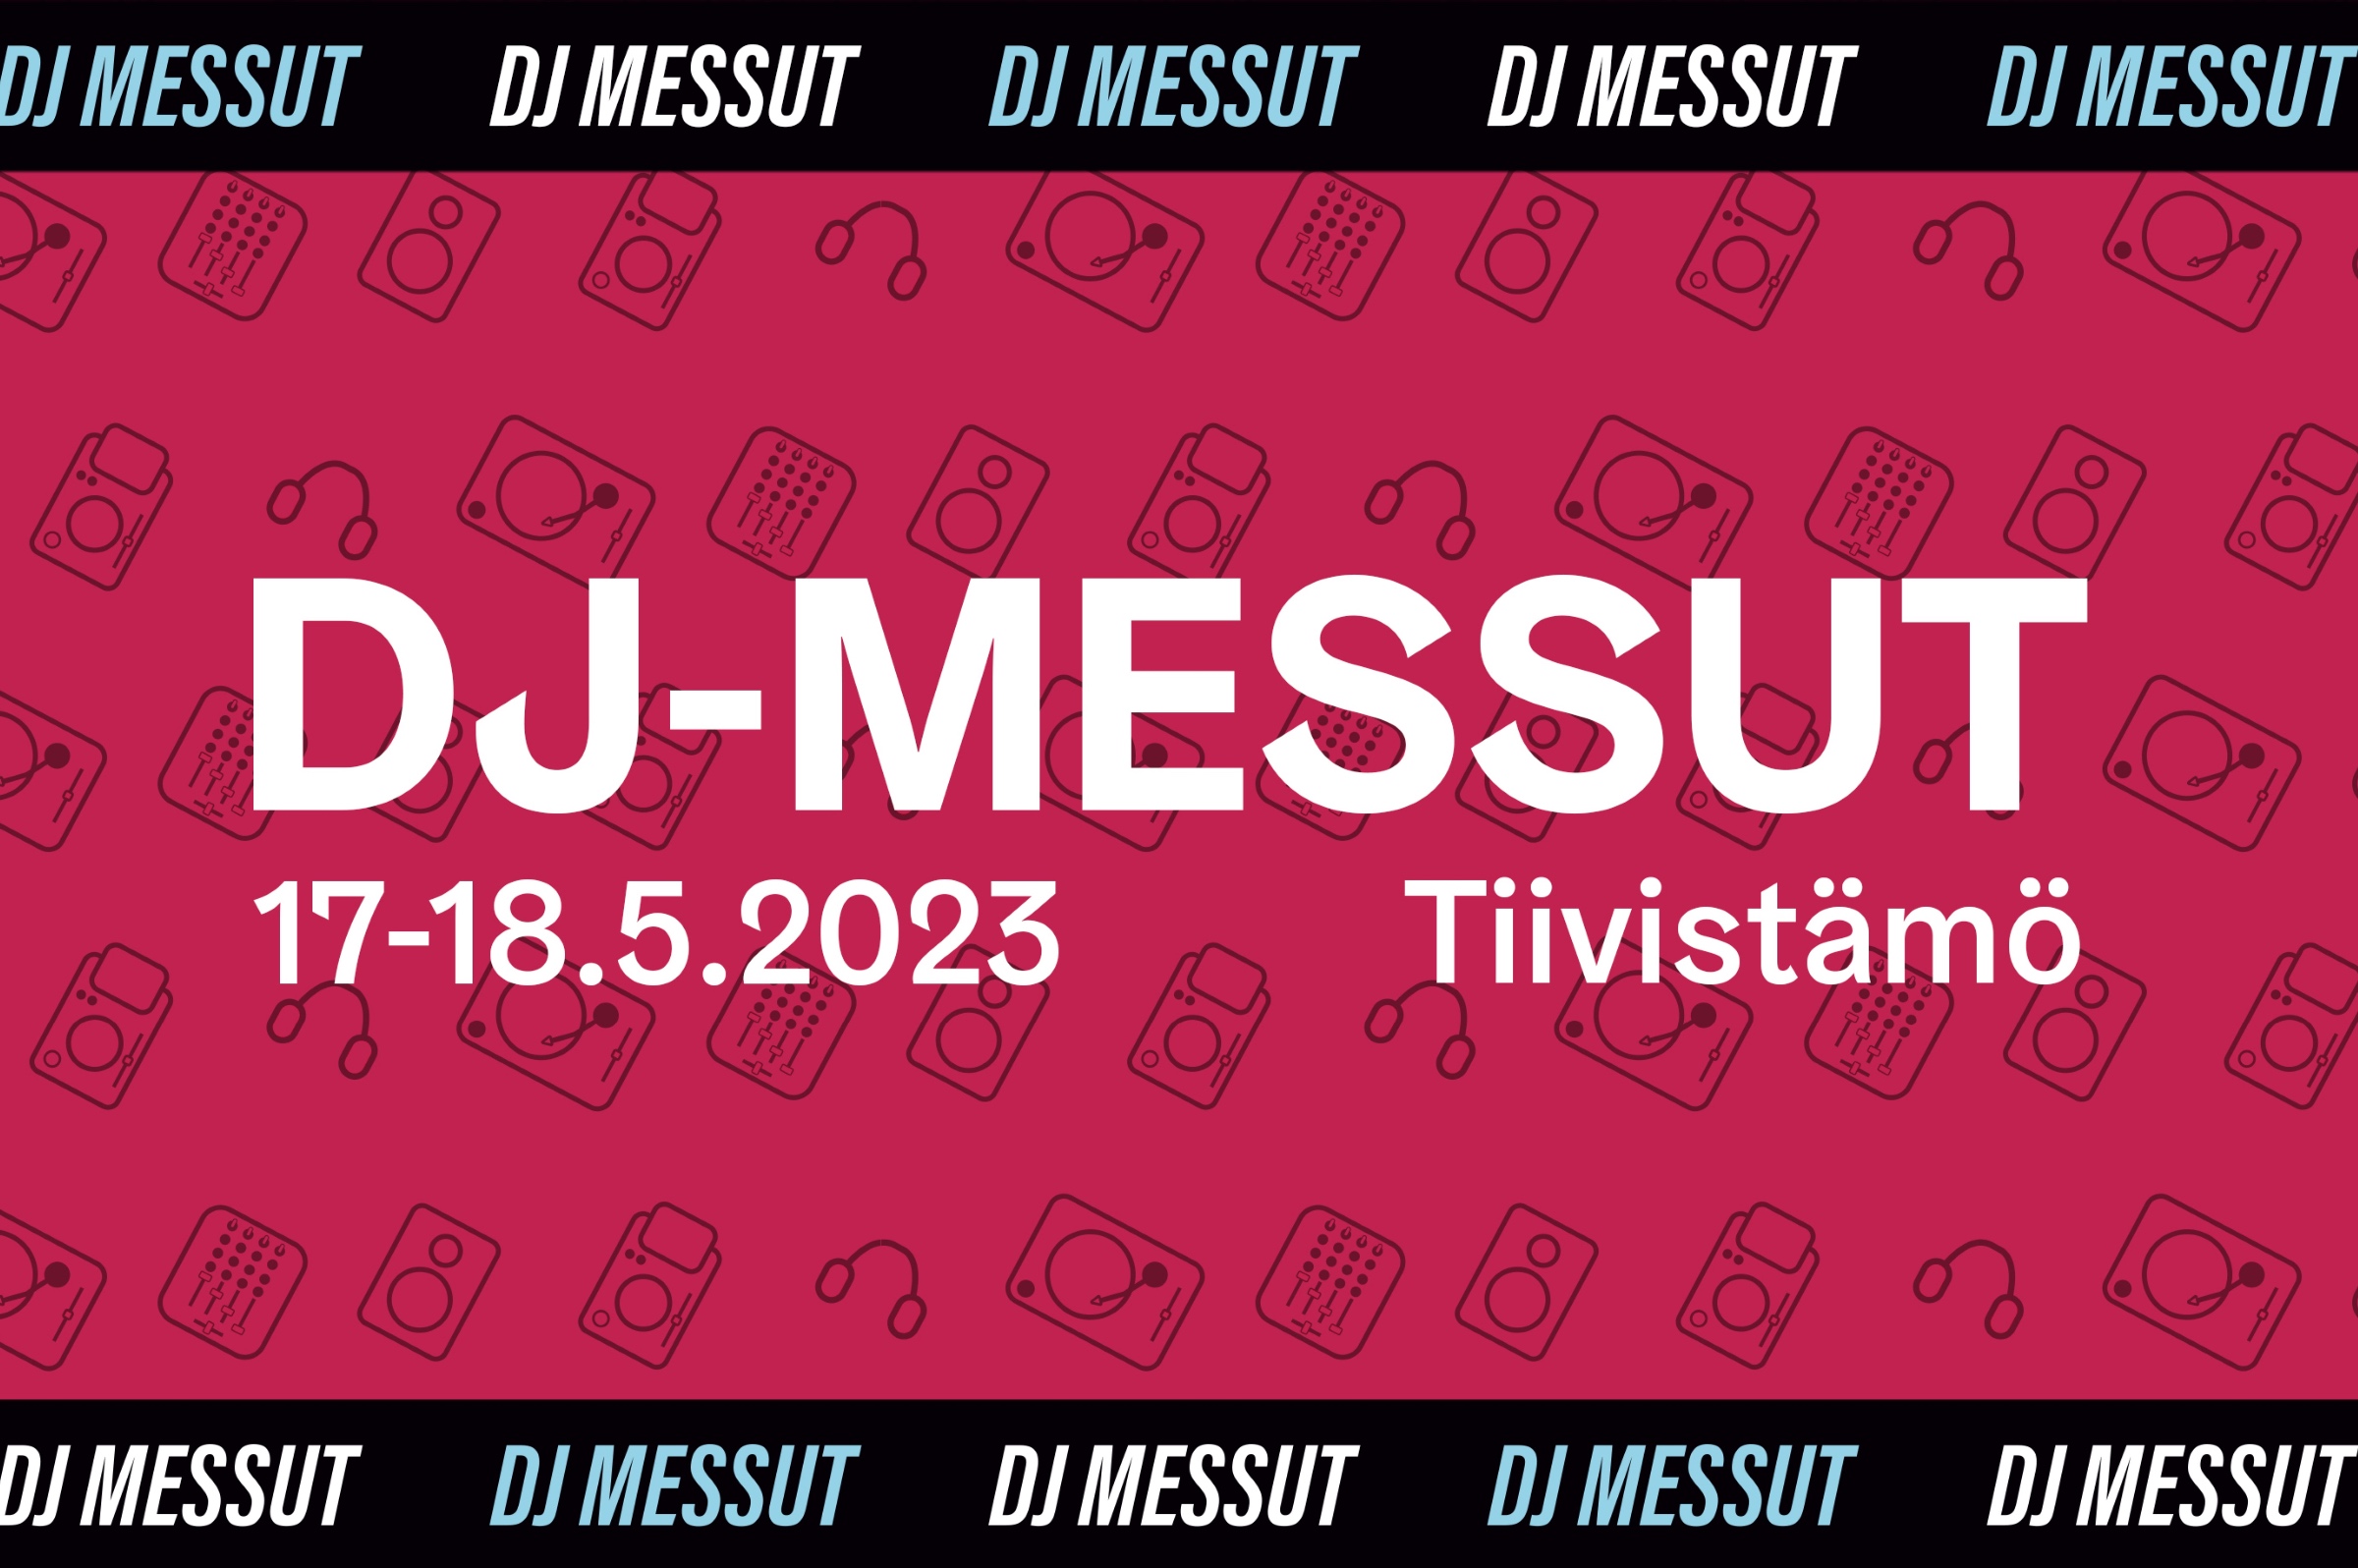 DJ-MESSUT